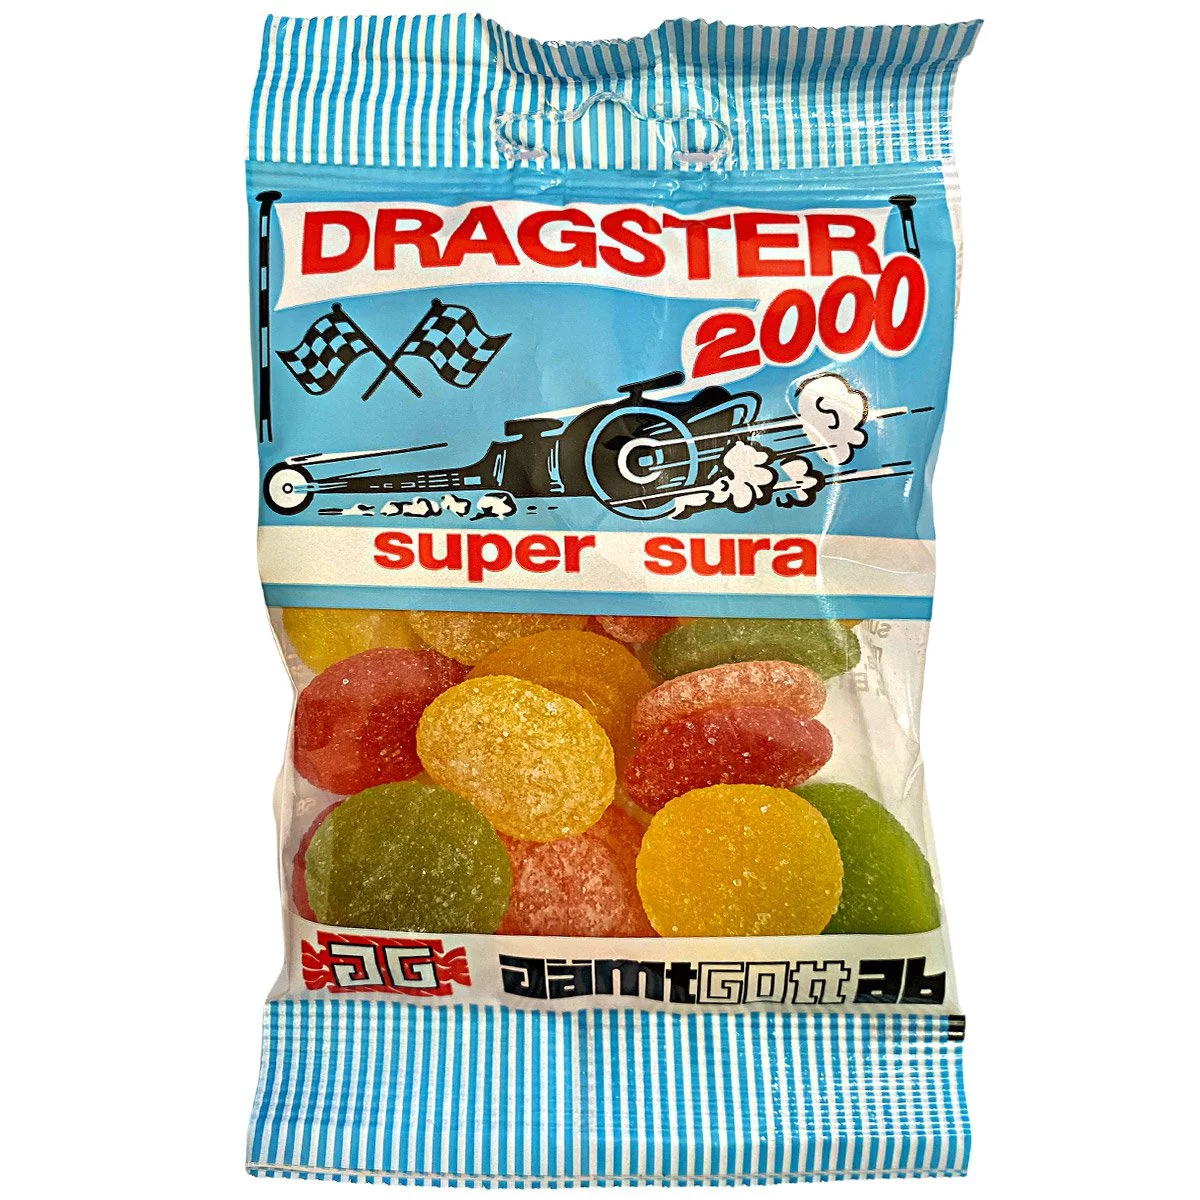 Dragster 2000 Super Sura - Supersauer (65g) 1